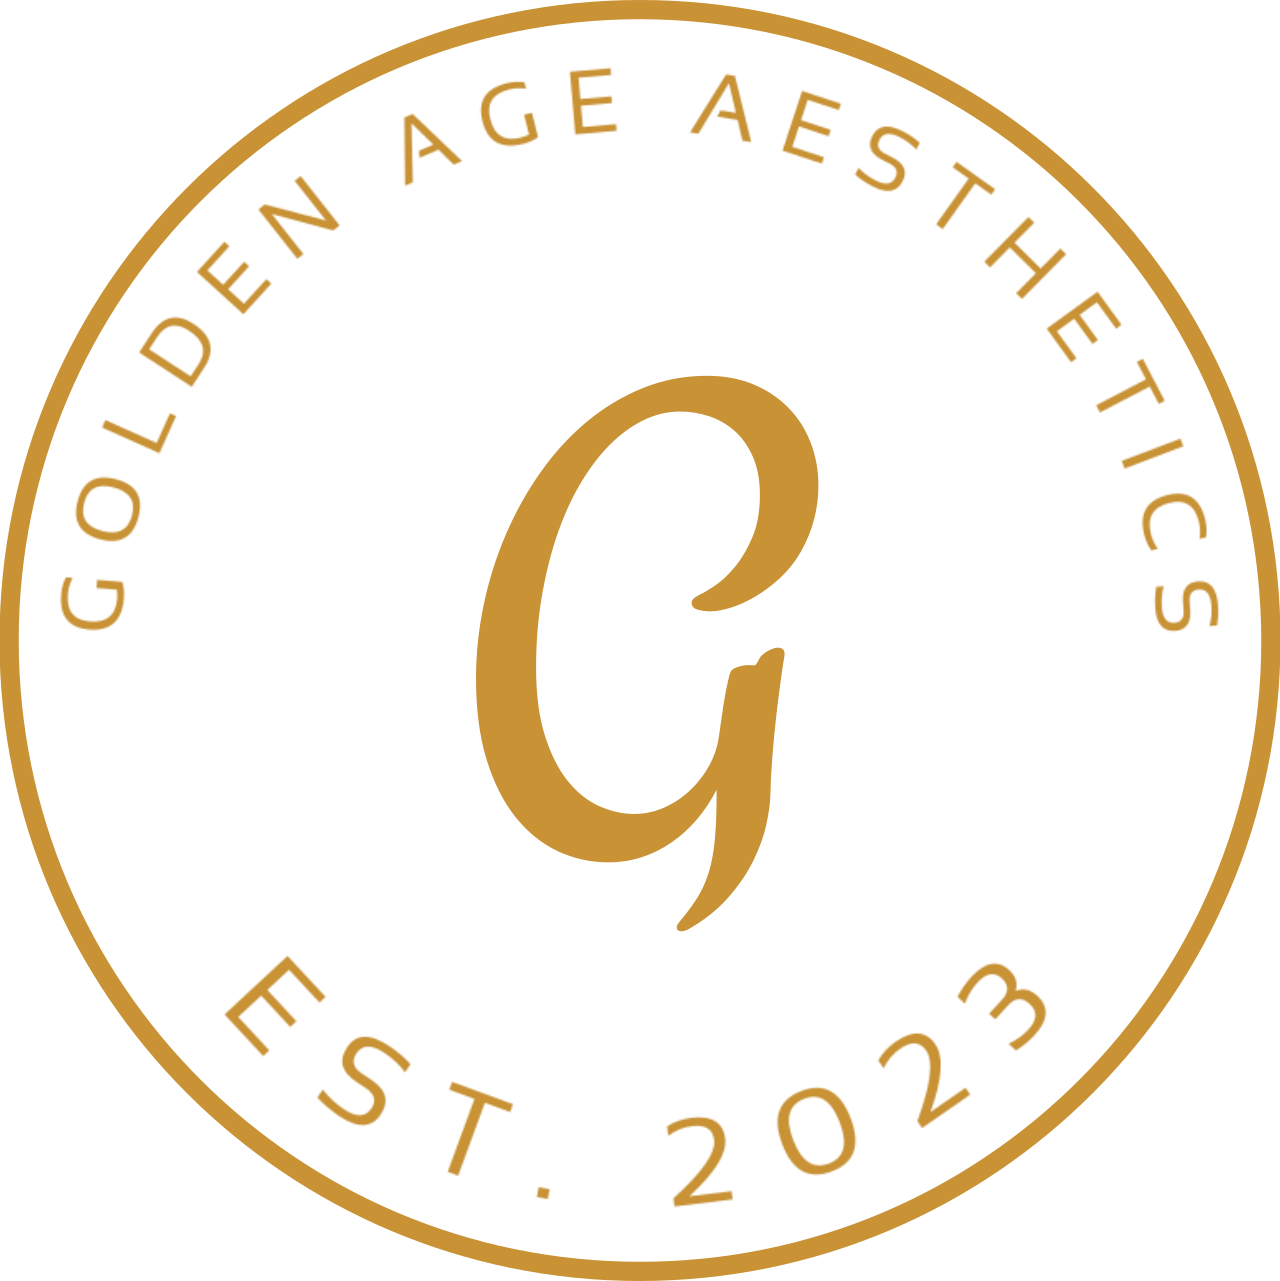 Golden Age Aesthetics's logo